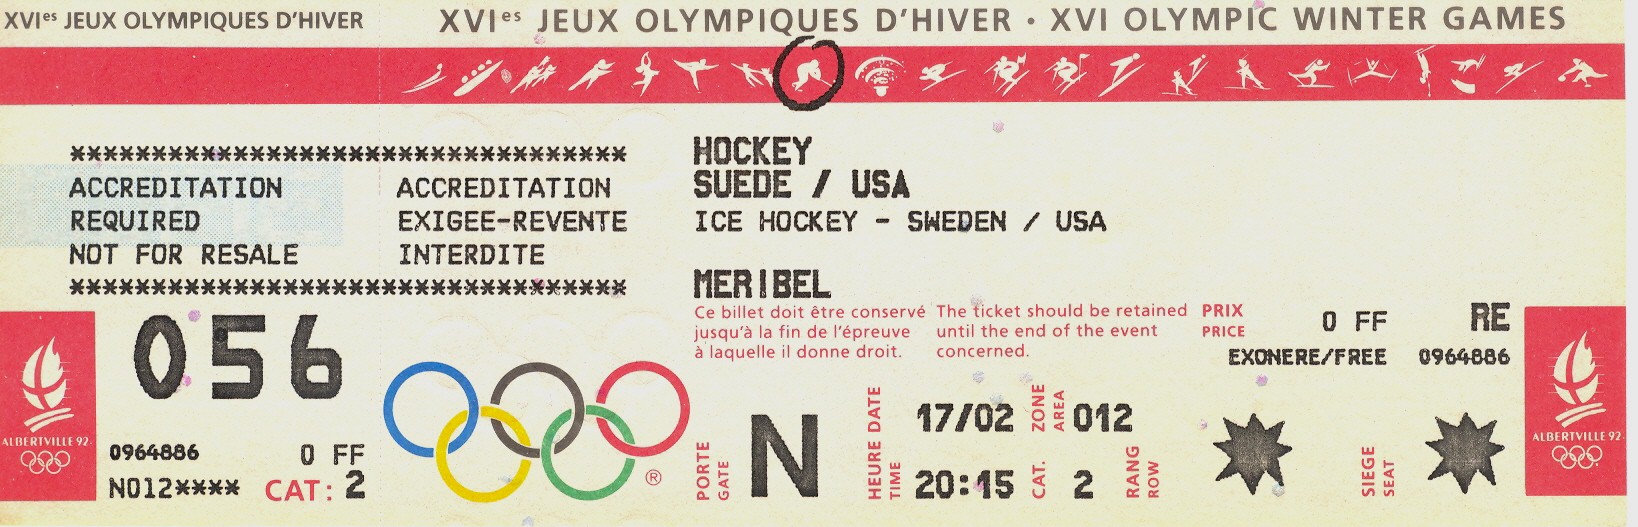 1992 Albertville Ticket